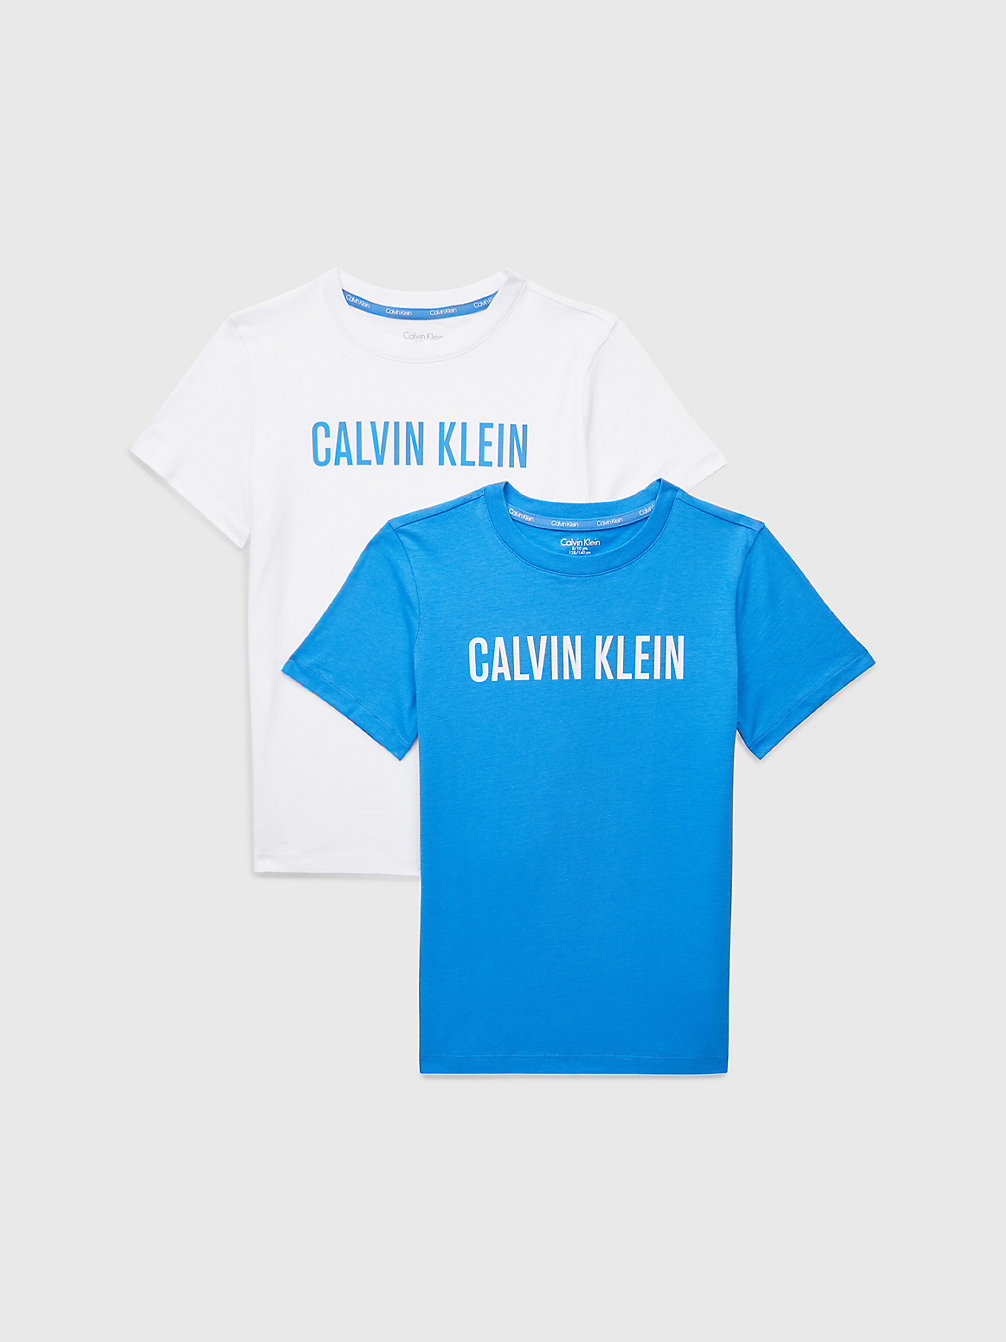 ELECTRICAQUA/PVHWHITE > Zestaw 2 Par T-Shirtów Chłopięcych - Intense Power > undefined boys - Calvin Klein